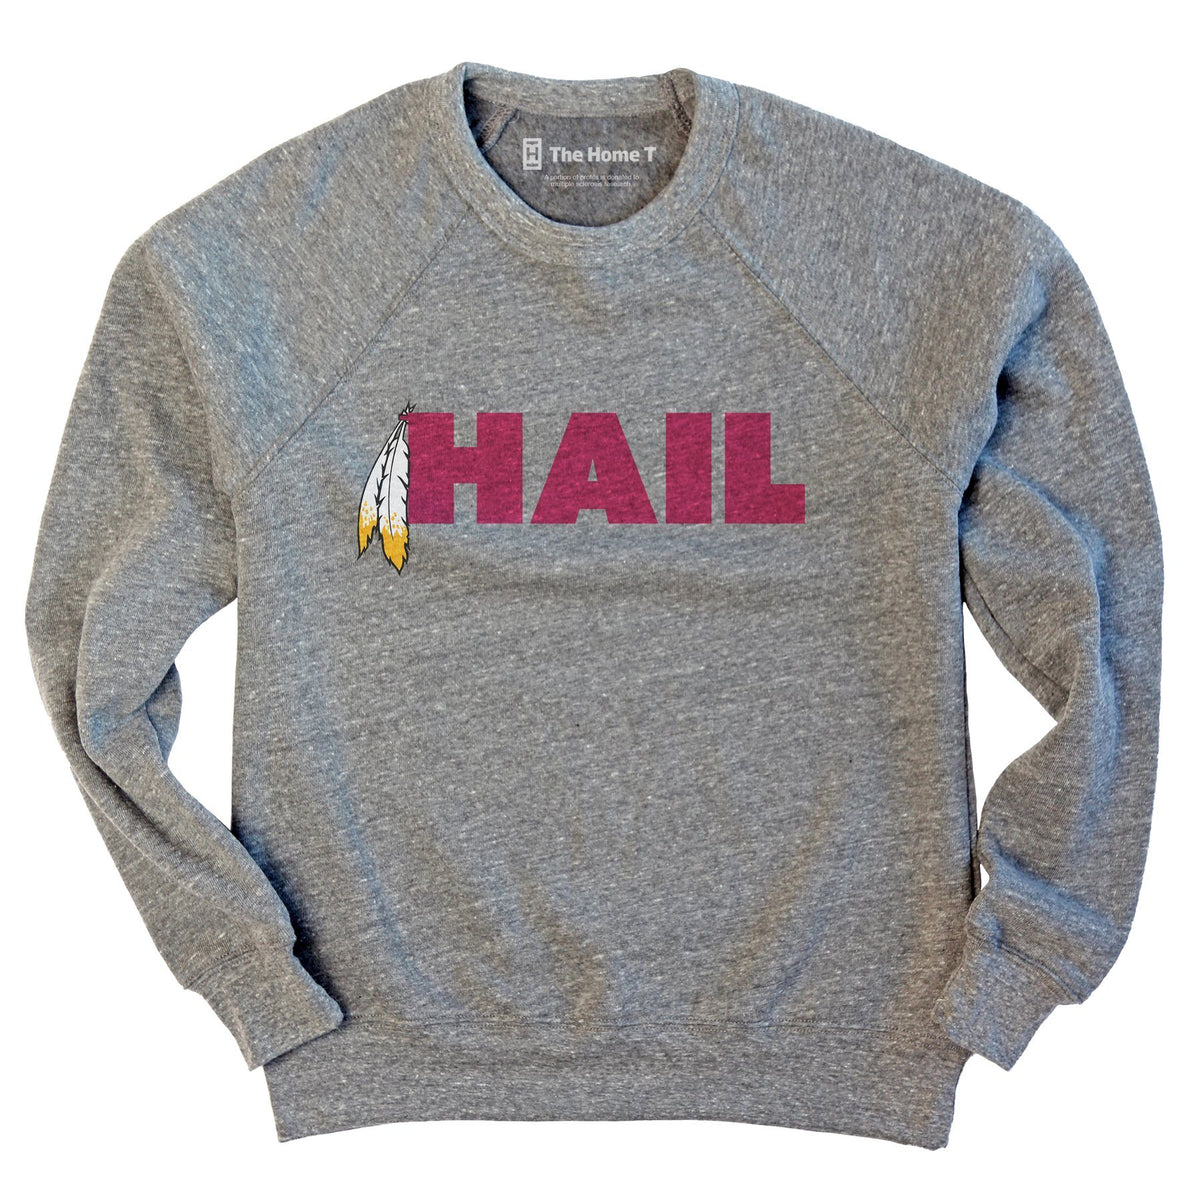 Hail Crew neck The Home T XXL Sweatshirt